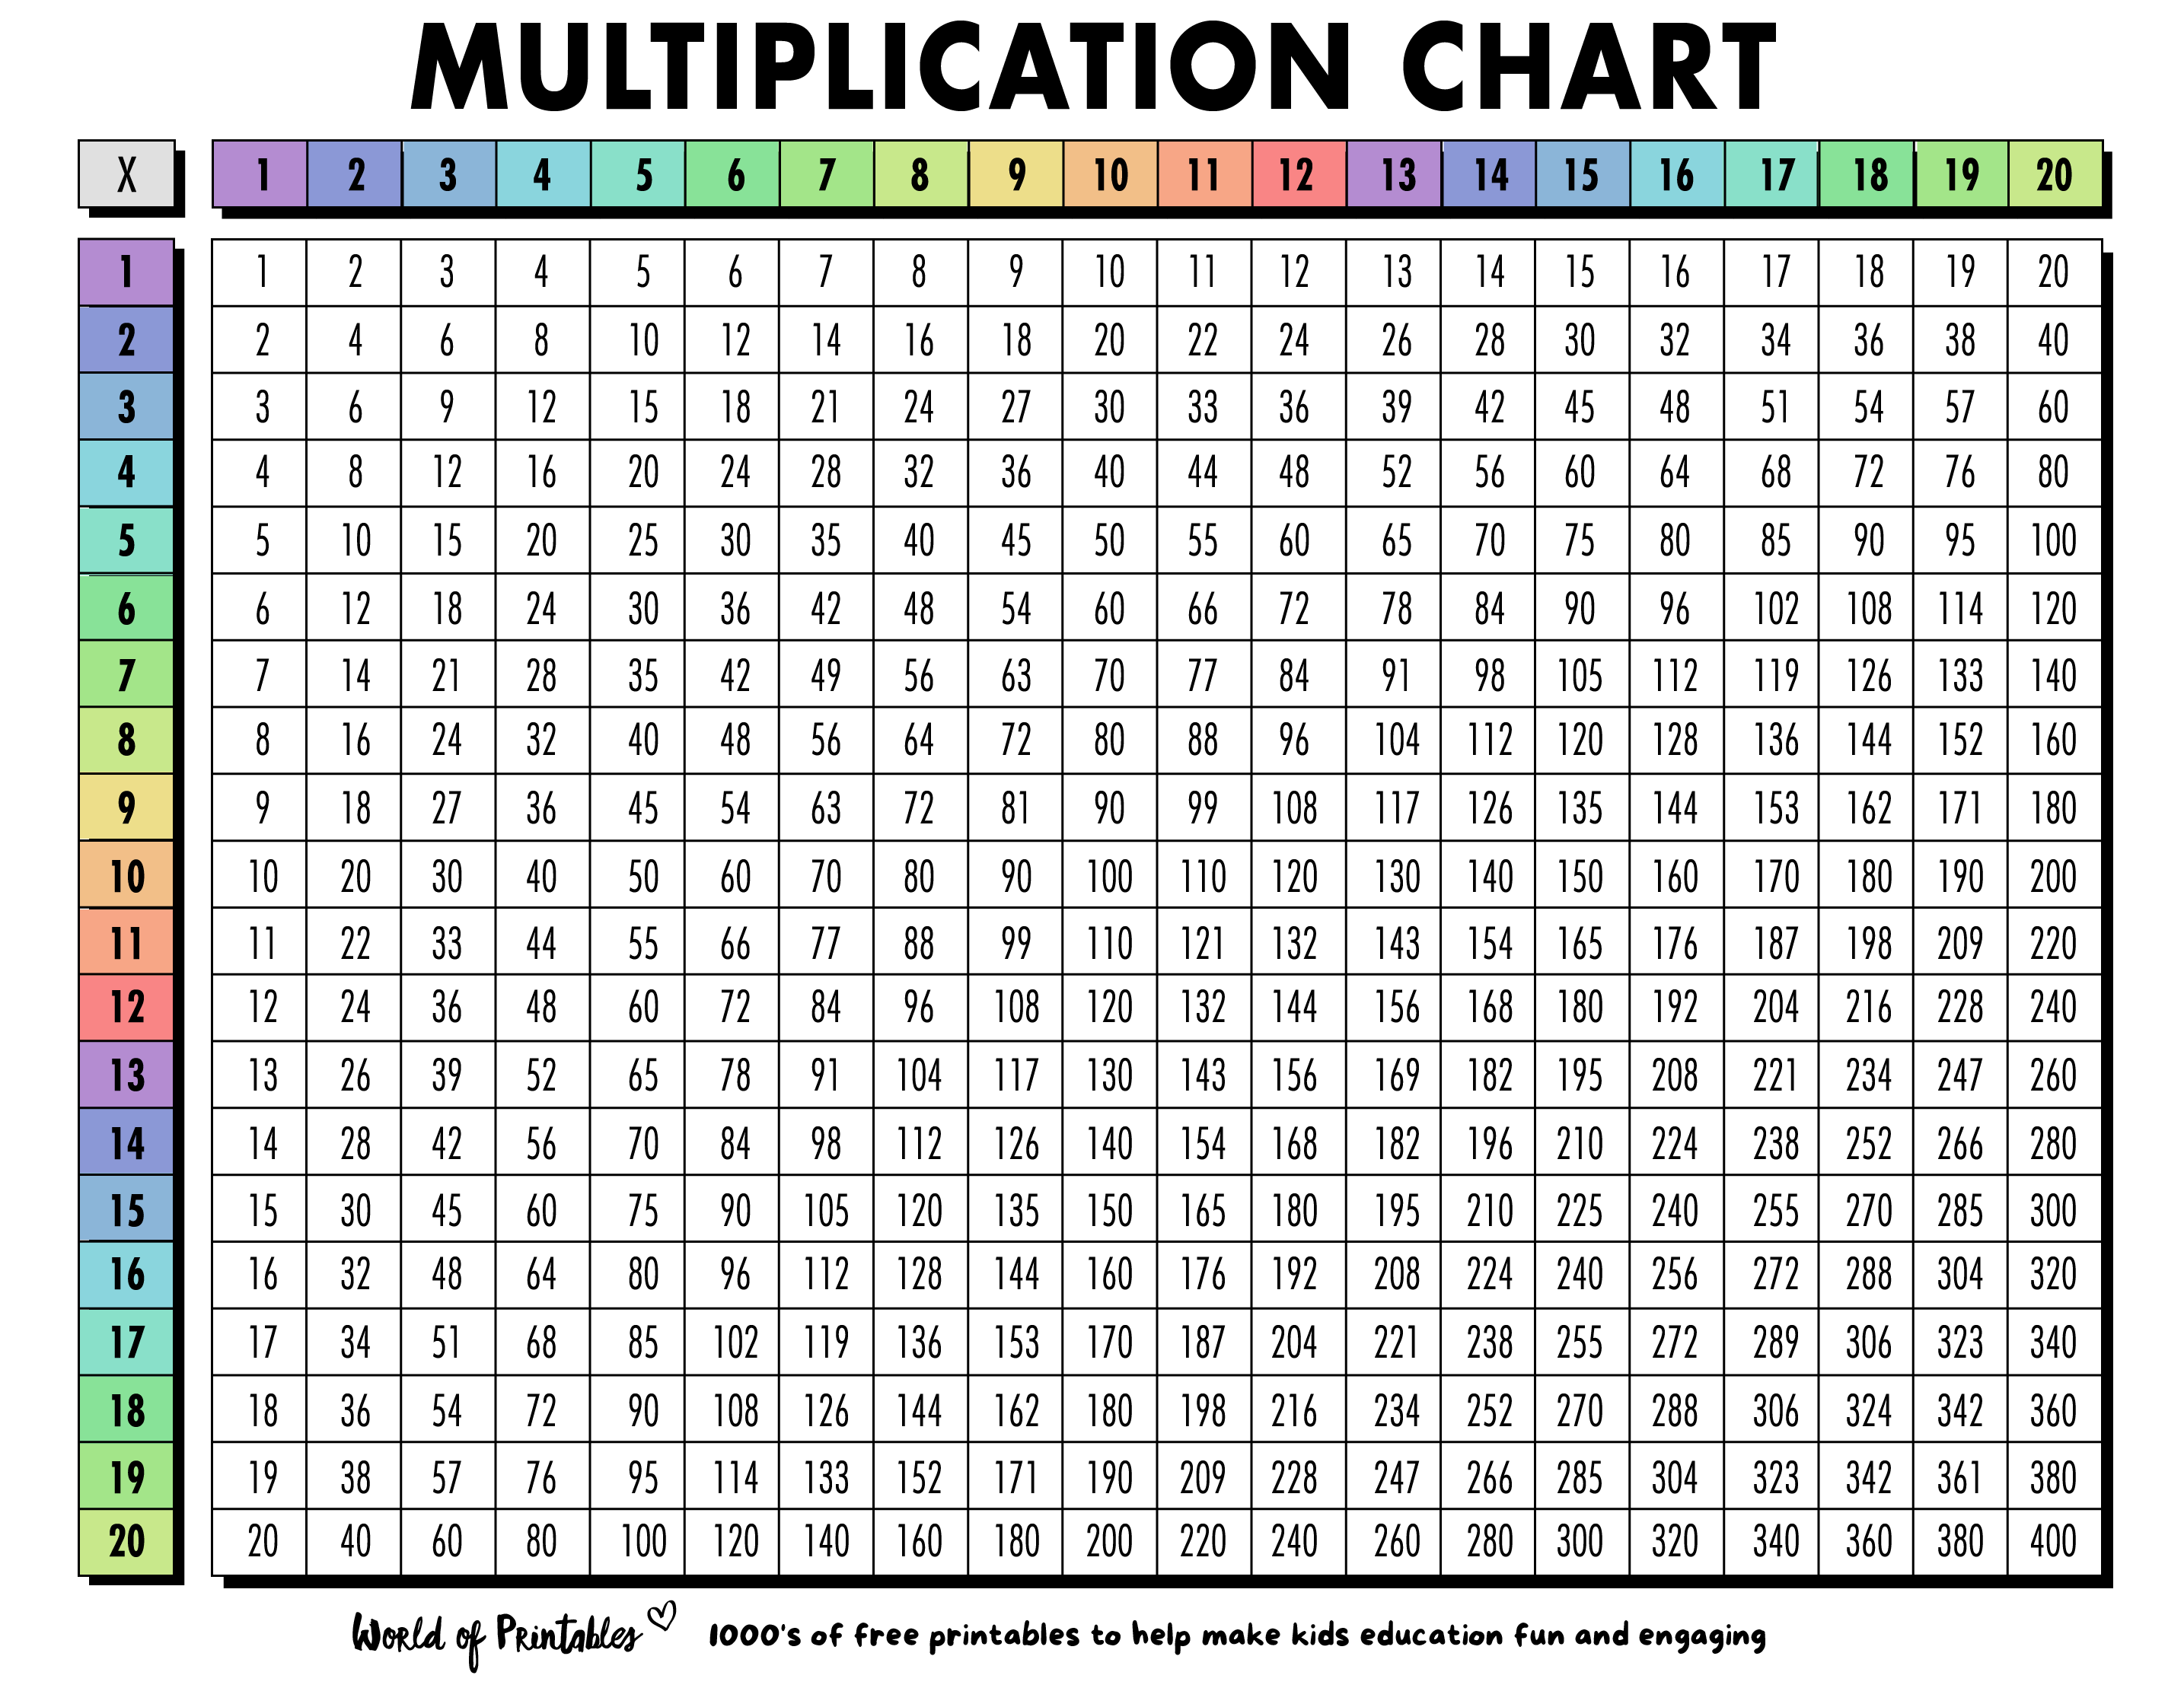 Free Multiplication Chart Printables - World of Printables